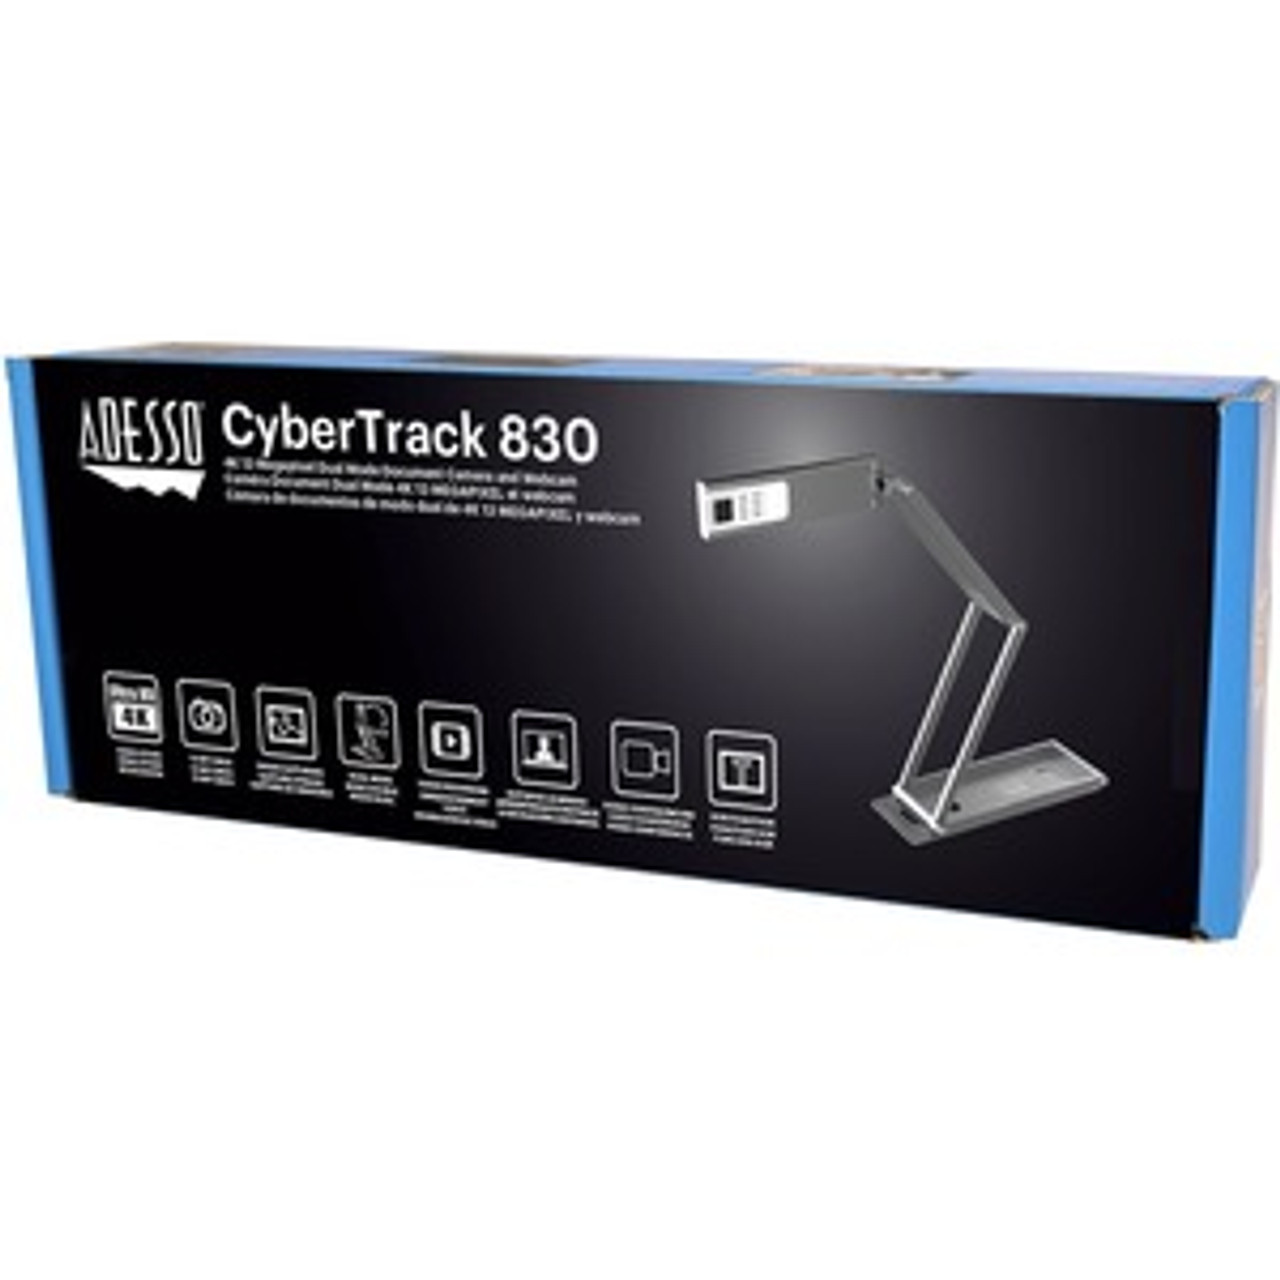 Cybertrack 830